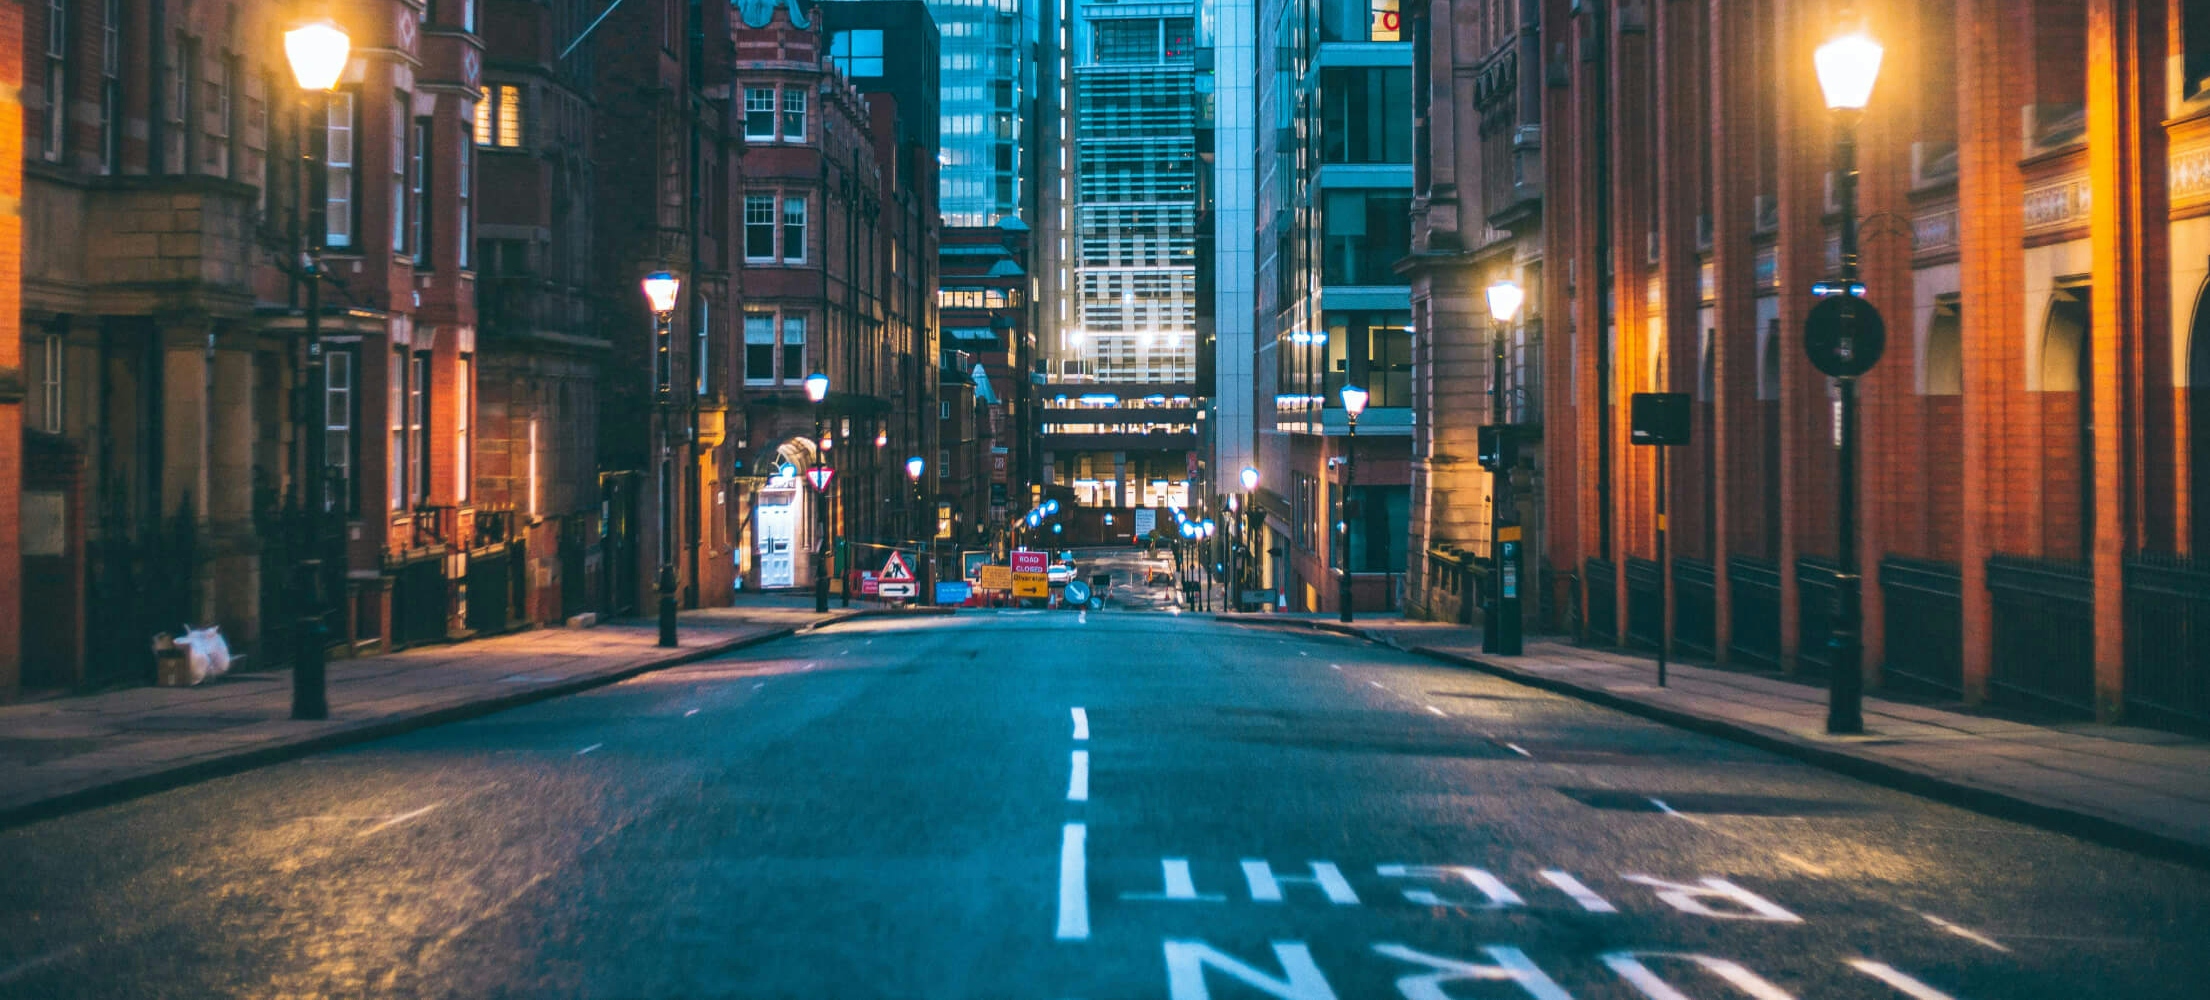 Birmingham city centre street at night